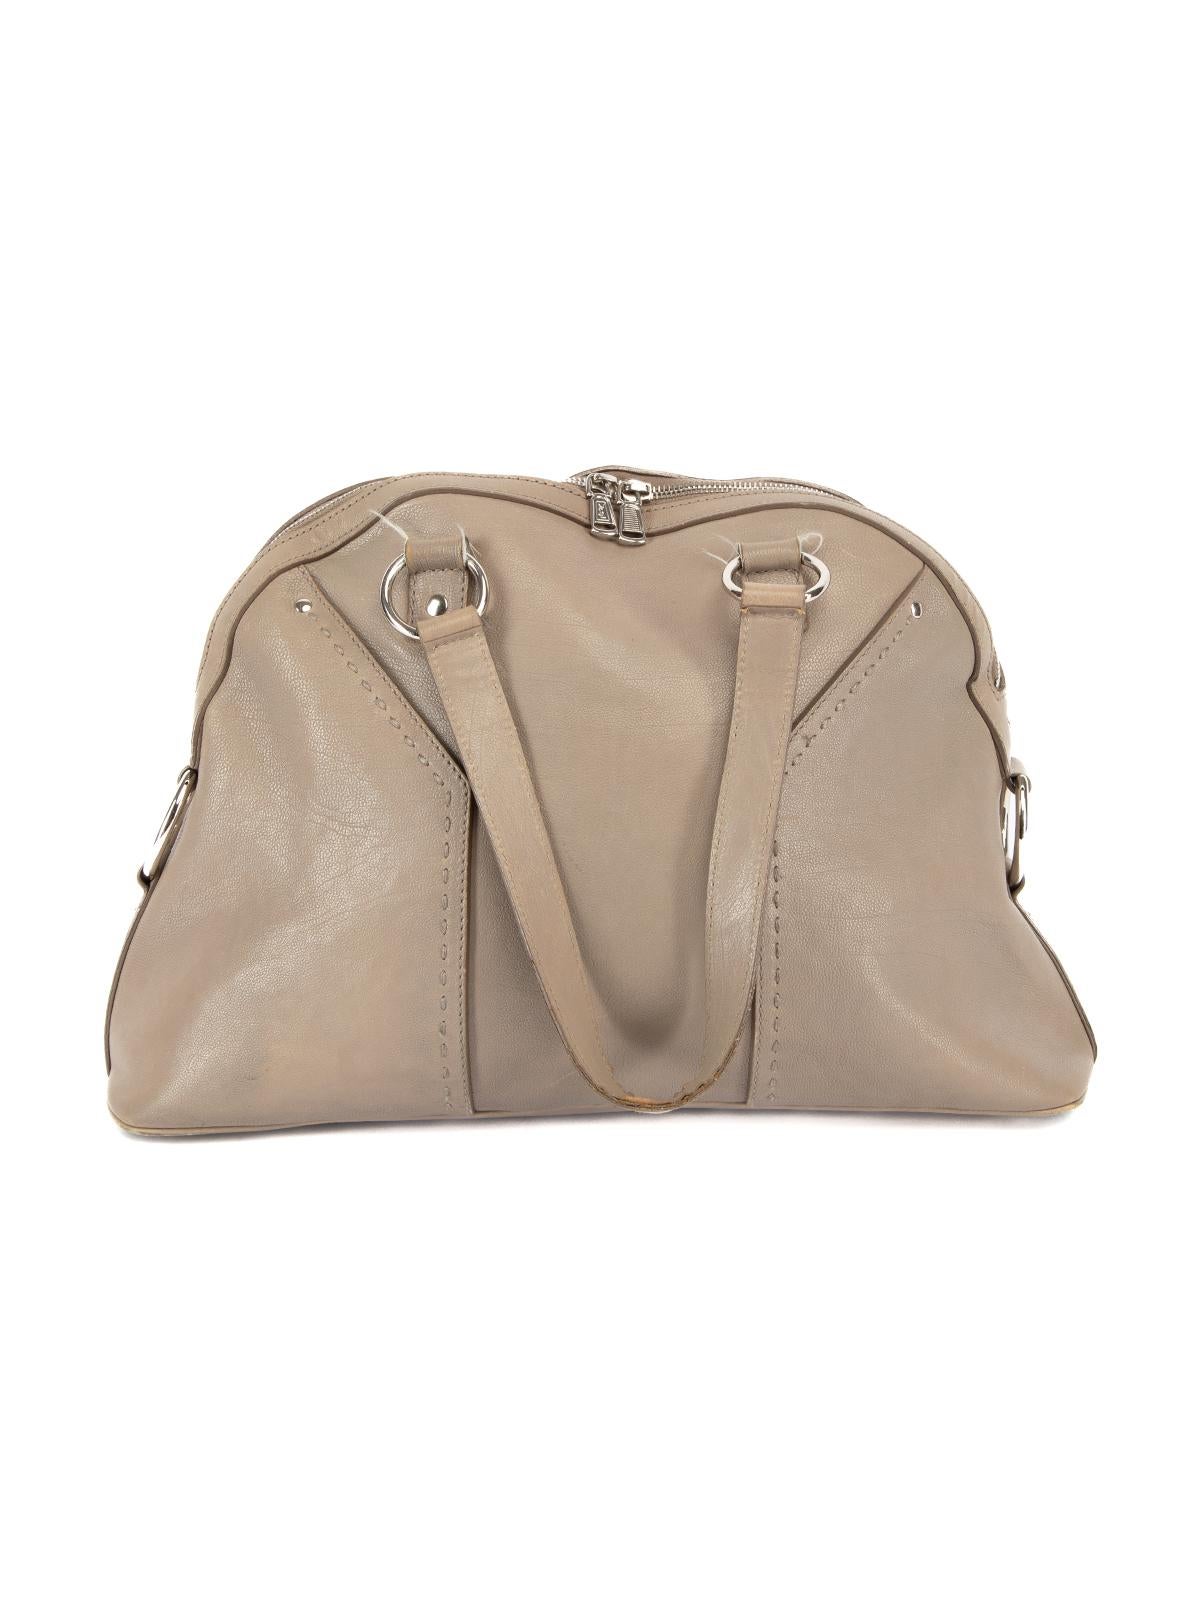 Saint Laurent Women's Yves Saint Laurent Brown Leather Muse Tote Bag For Sale 1